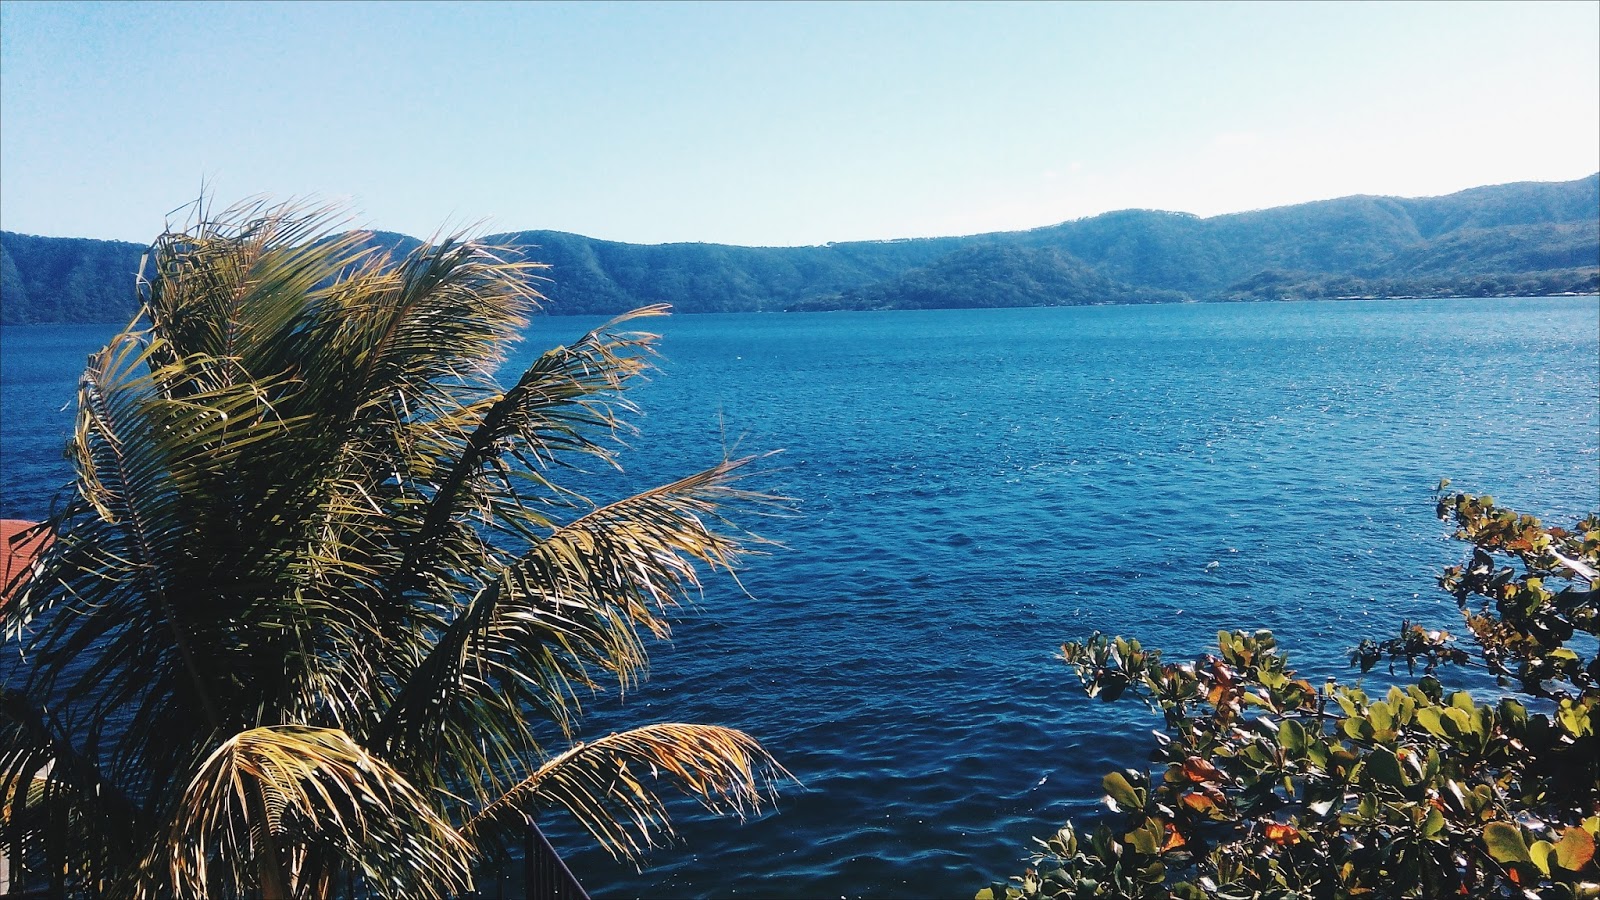 Resultado de imagen para vista panoramica de lago de coatepeque